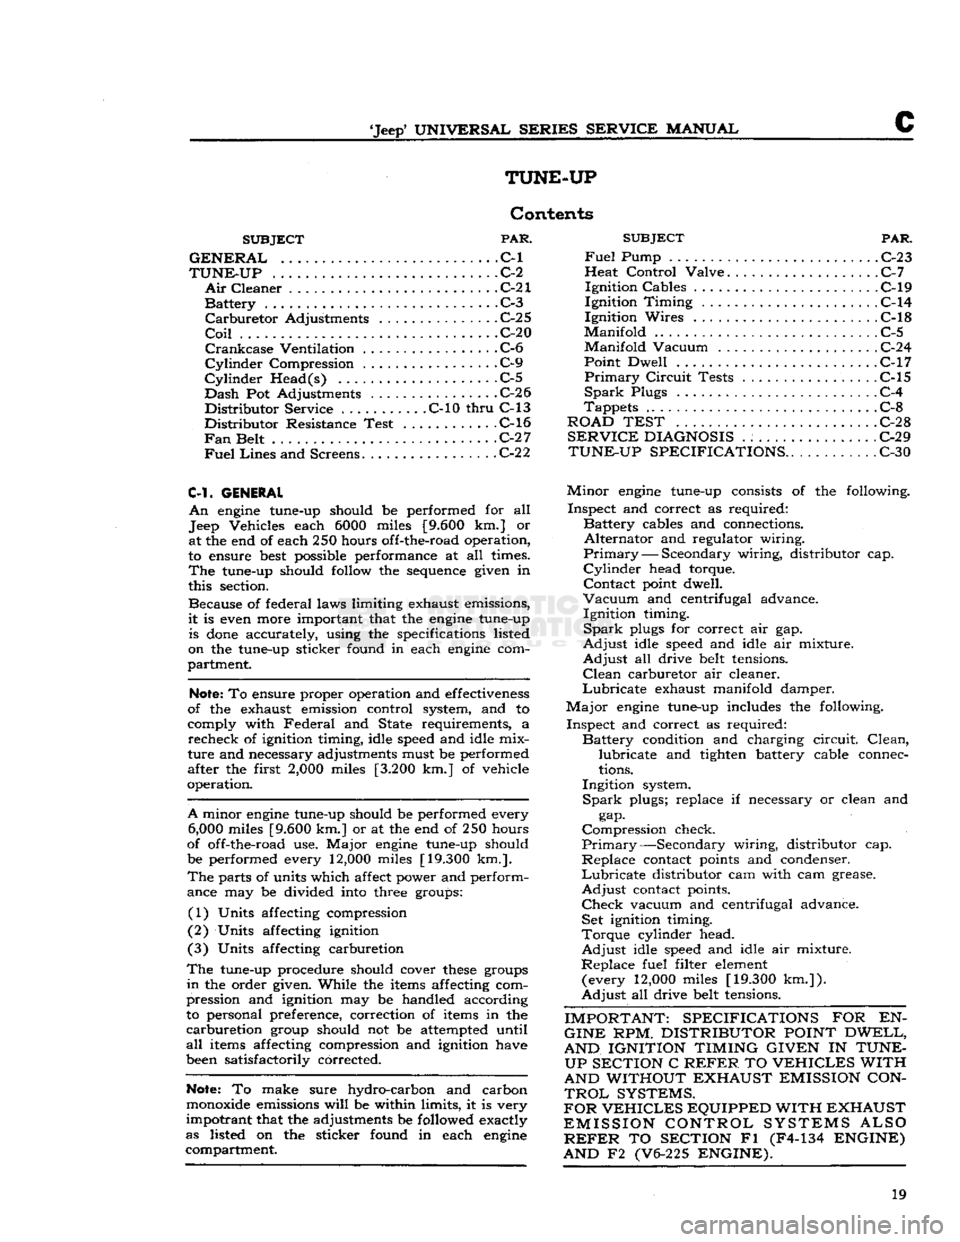 JEEP DJ 1953  Service Manual 
Jeep*
 UNIVERSAL SERIES SERVICE
 MANUAL 

c 
TUNE-UP 

Contents 

SUBJECT
 PAR. 

GENERAL
 C-l 

TUNE-UP
 .C-2 
 Air
 Cleaner
 C-21 

Battery
 . C-3 
Carburetor
 Adjustments
 C-2 5 

Coil
 C-20 
 Cra